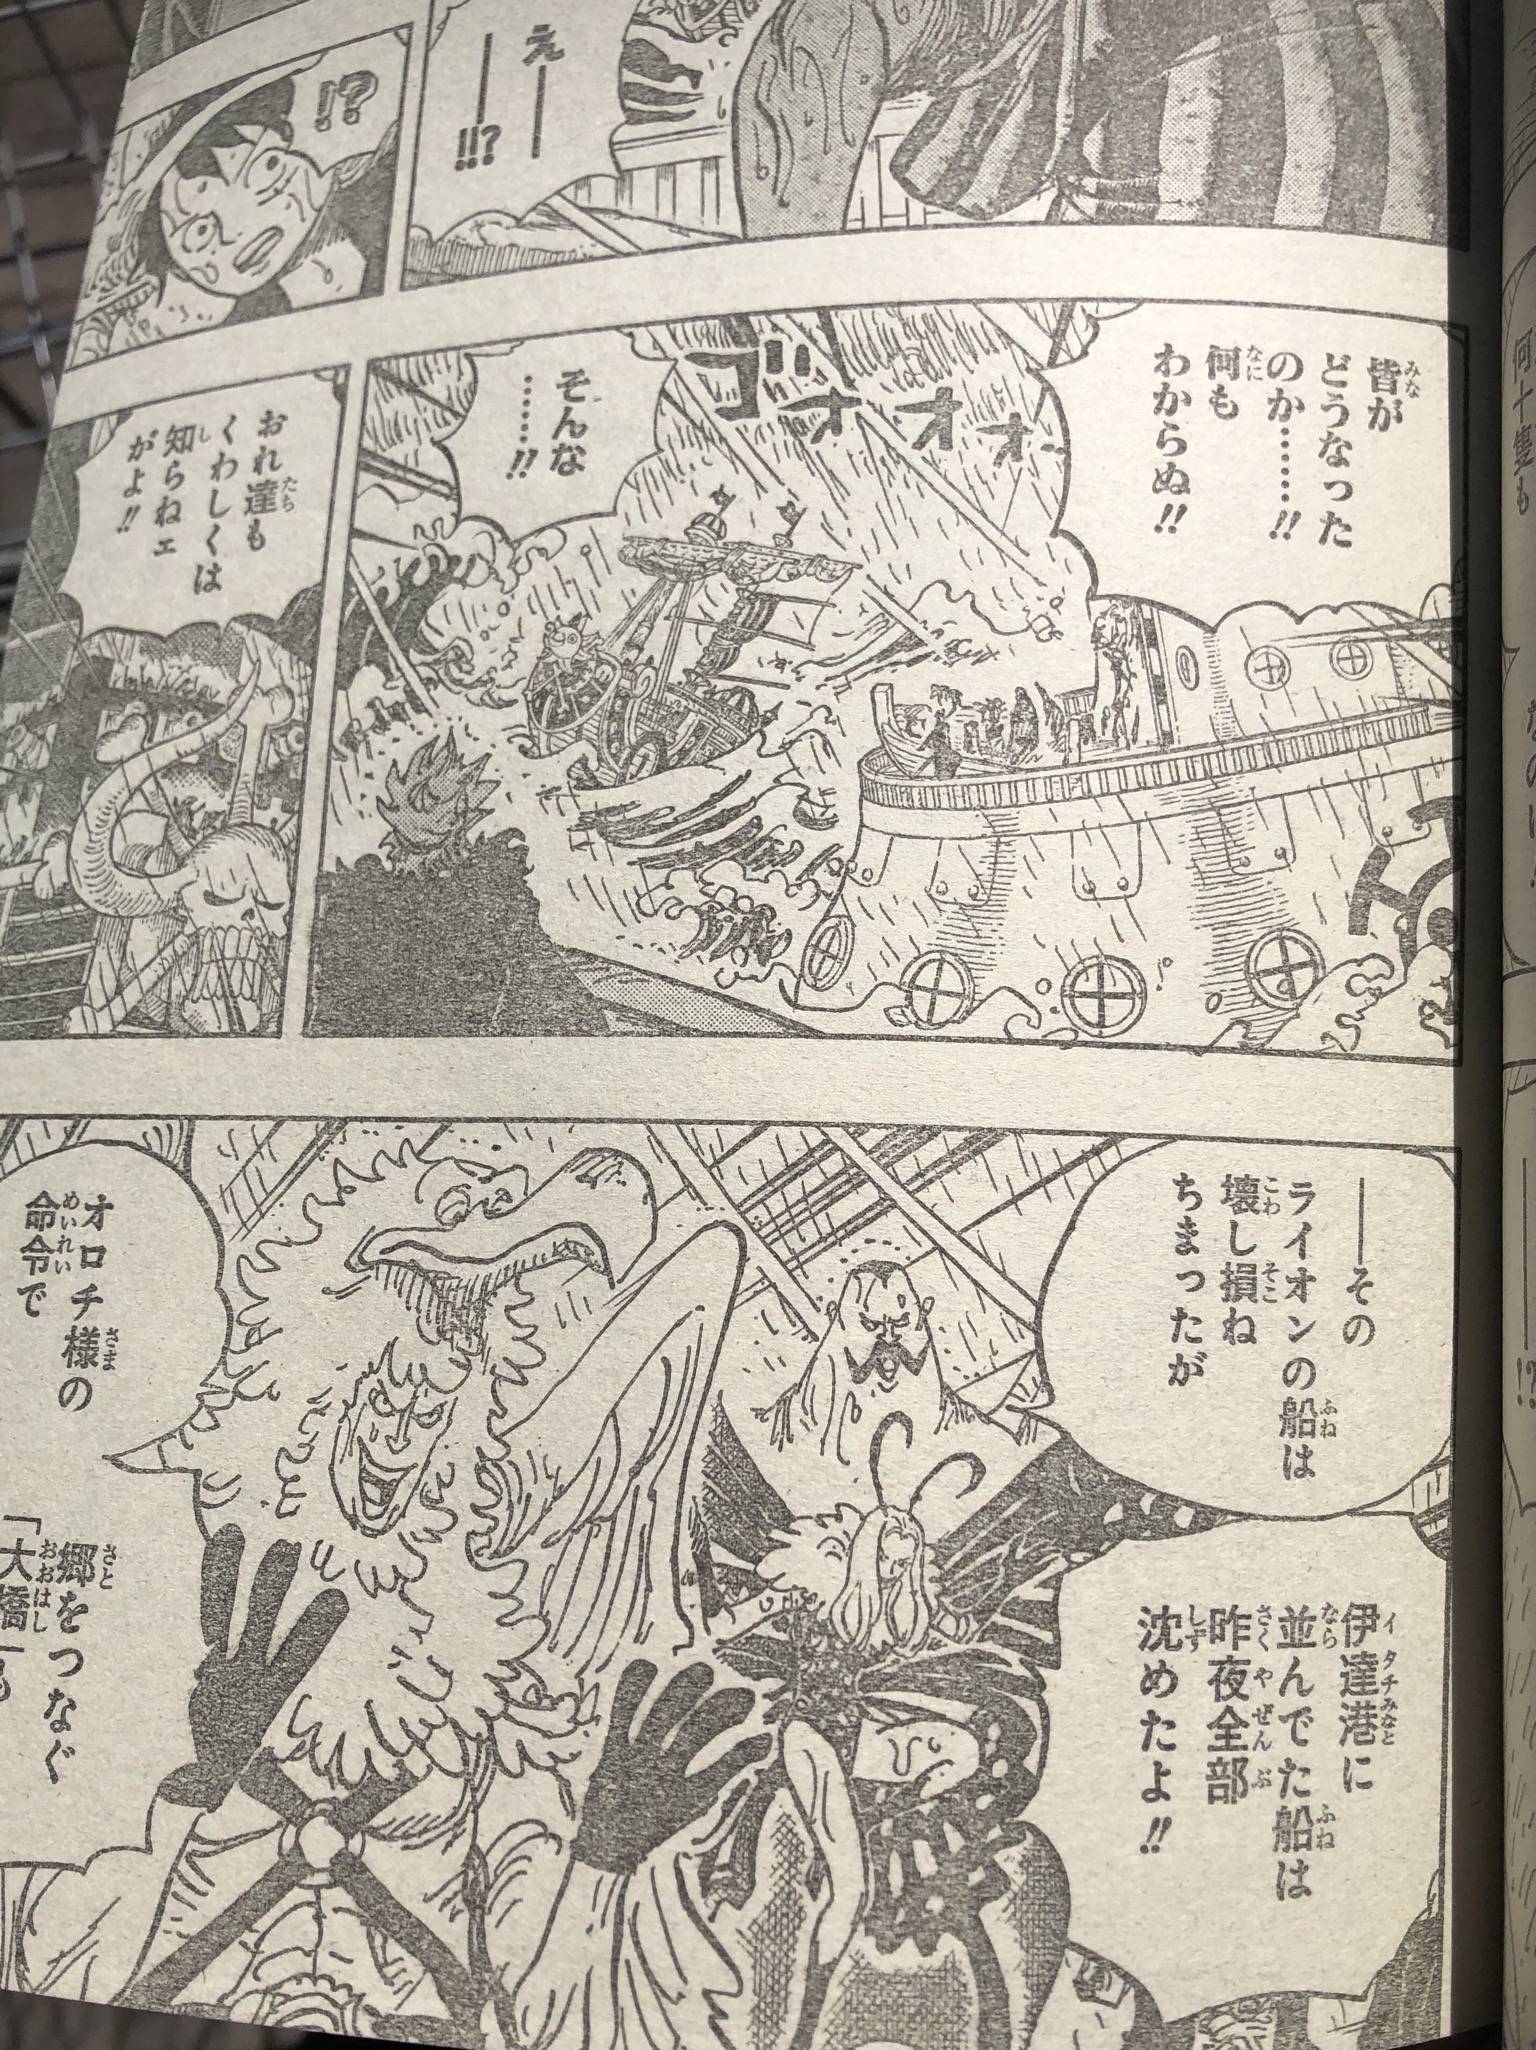 Spoiler One Piece Chapter 975 Spoiler Summaries And Images Page 2 Worstgen